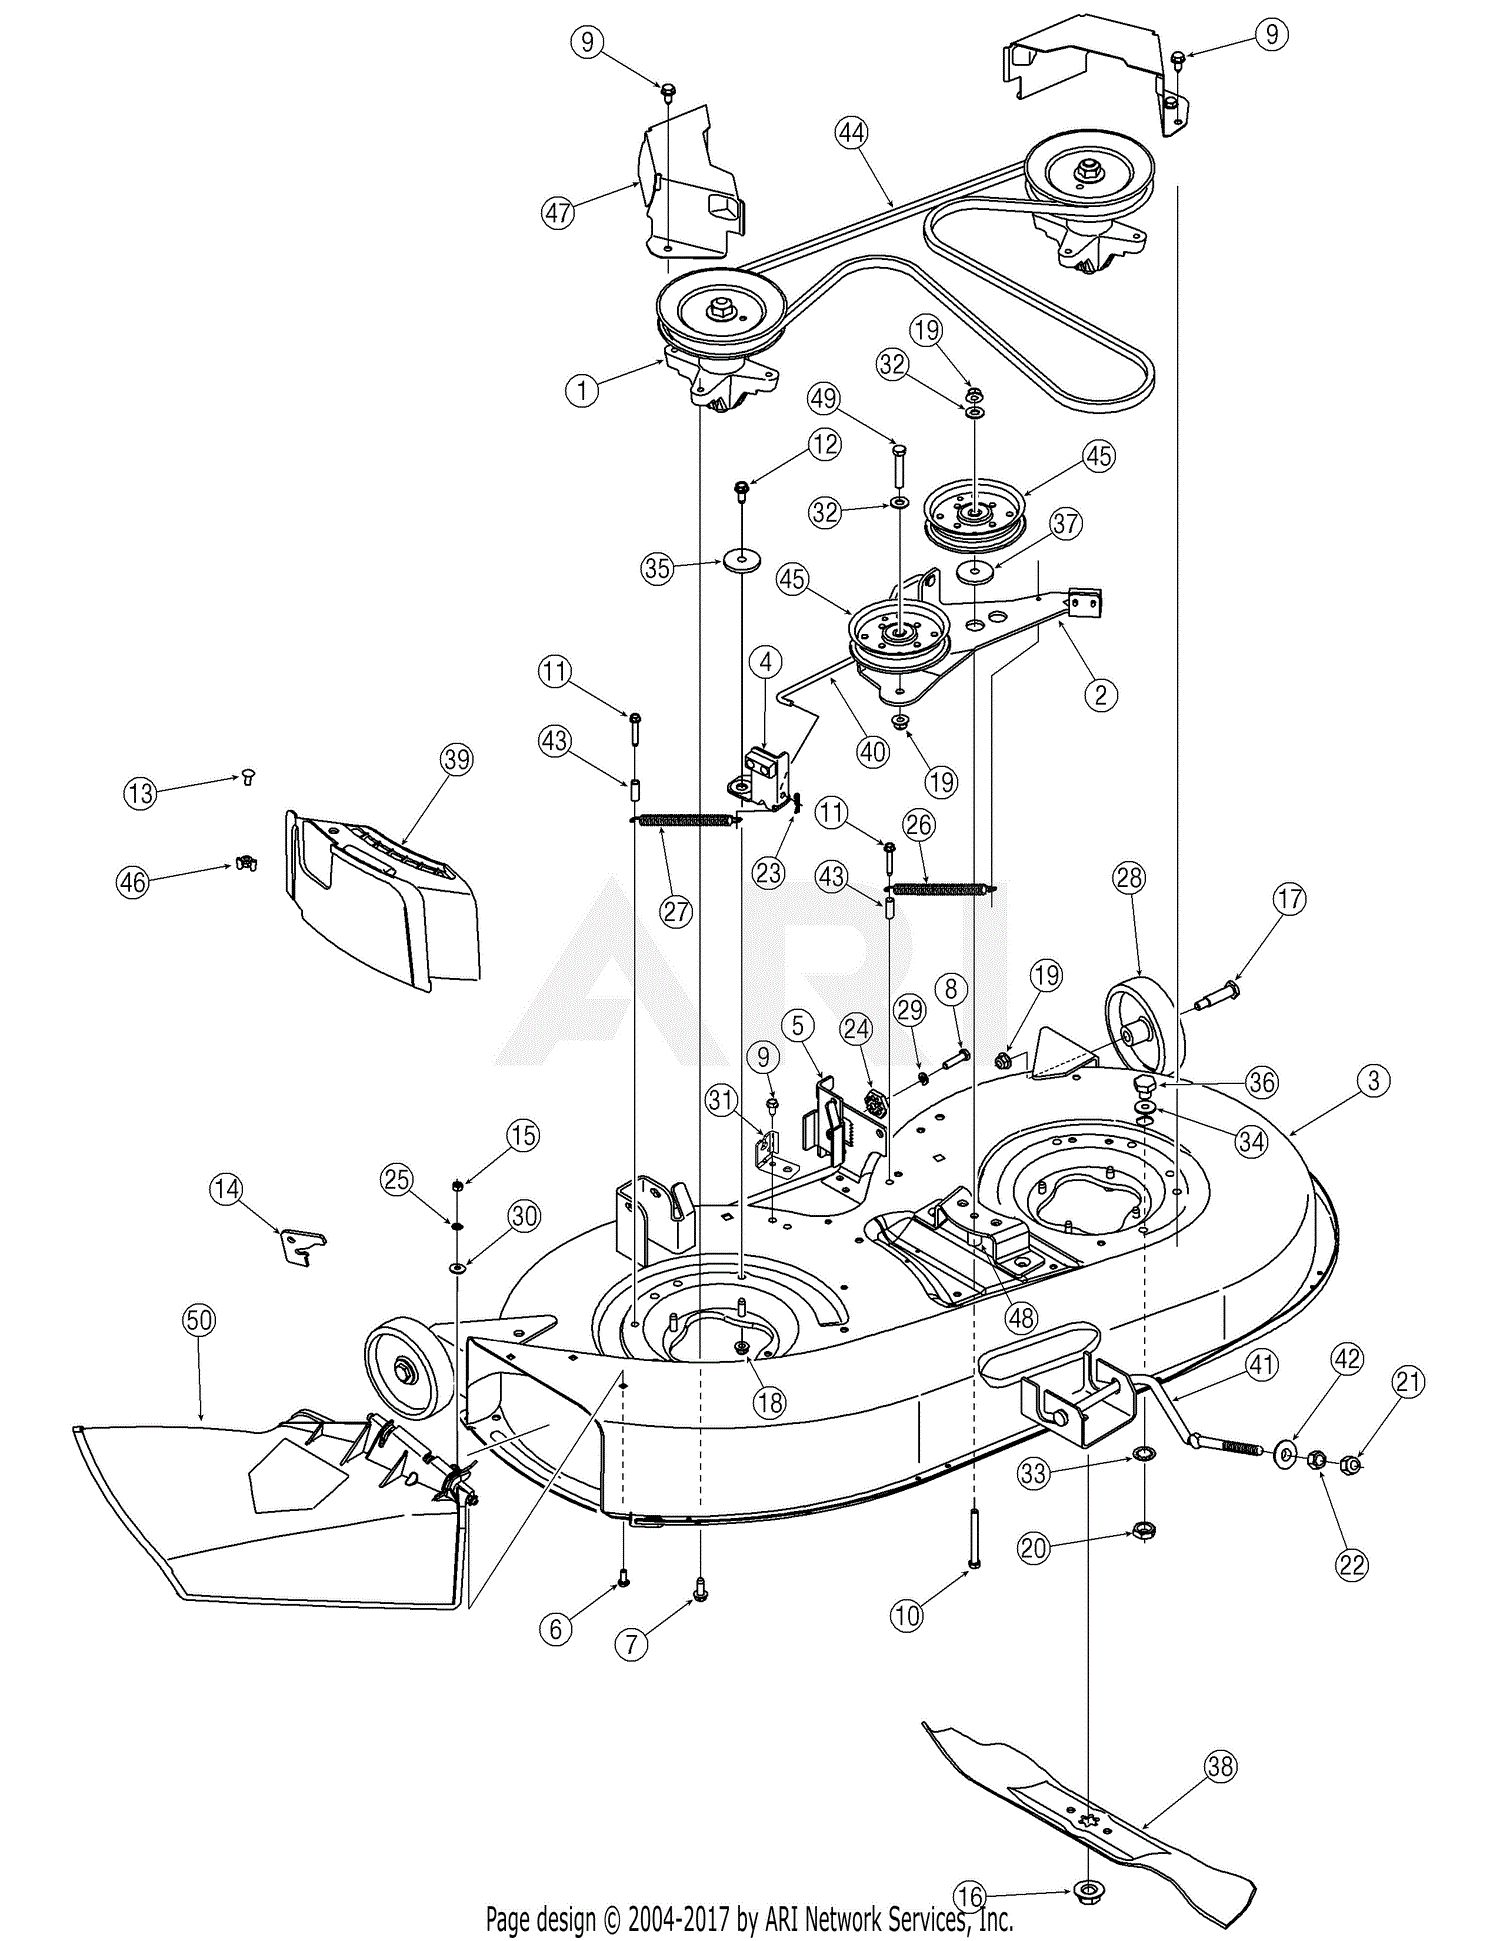 drive-belt-mtd-46-inch-deck-belt-diagram-knitied